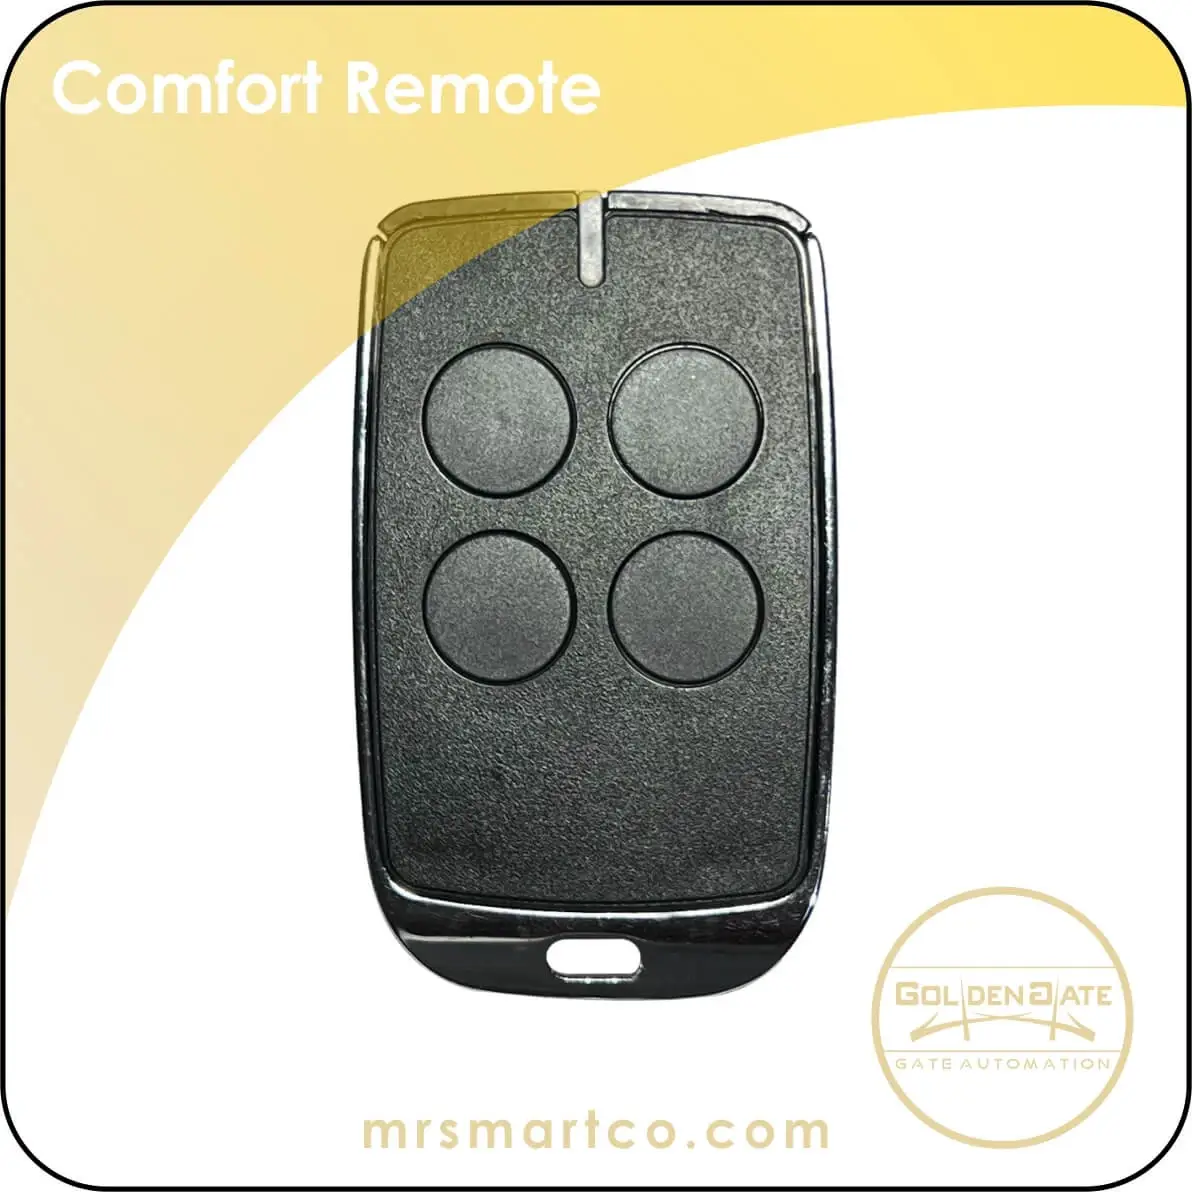 4key comfort remote